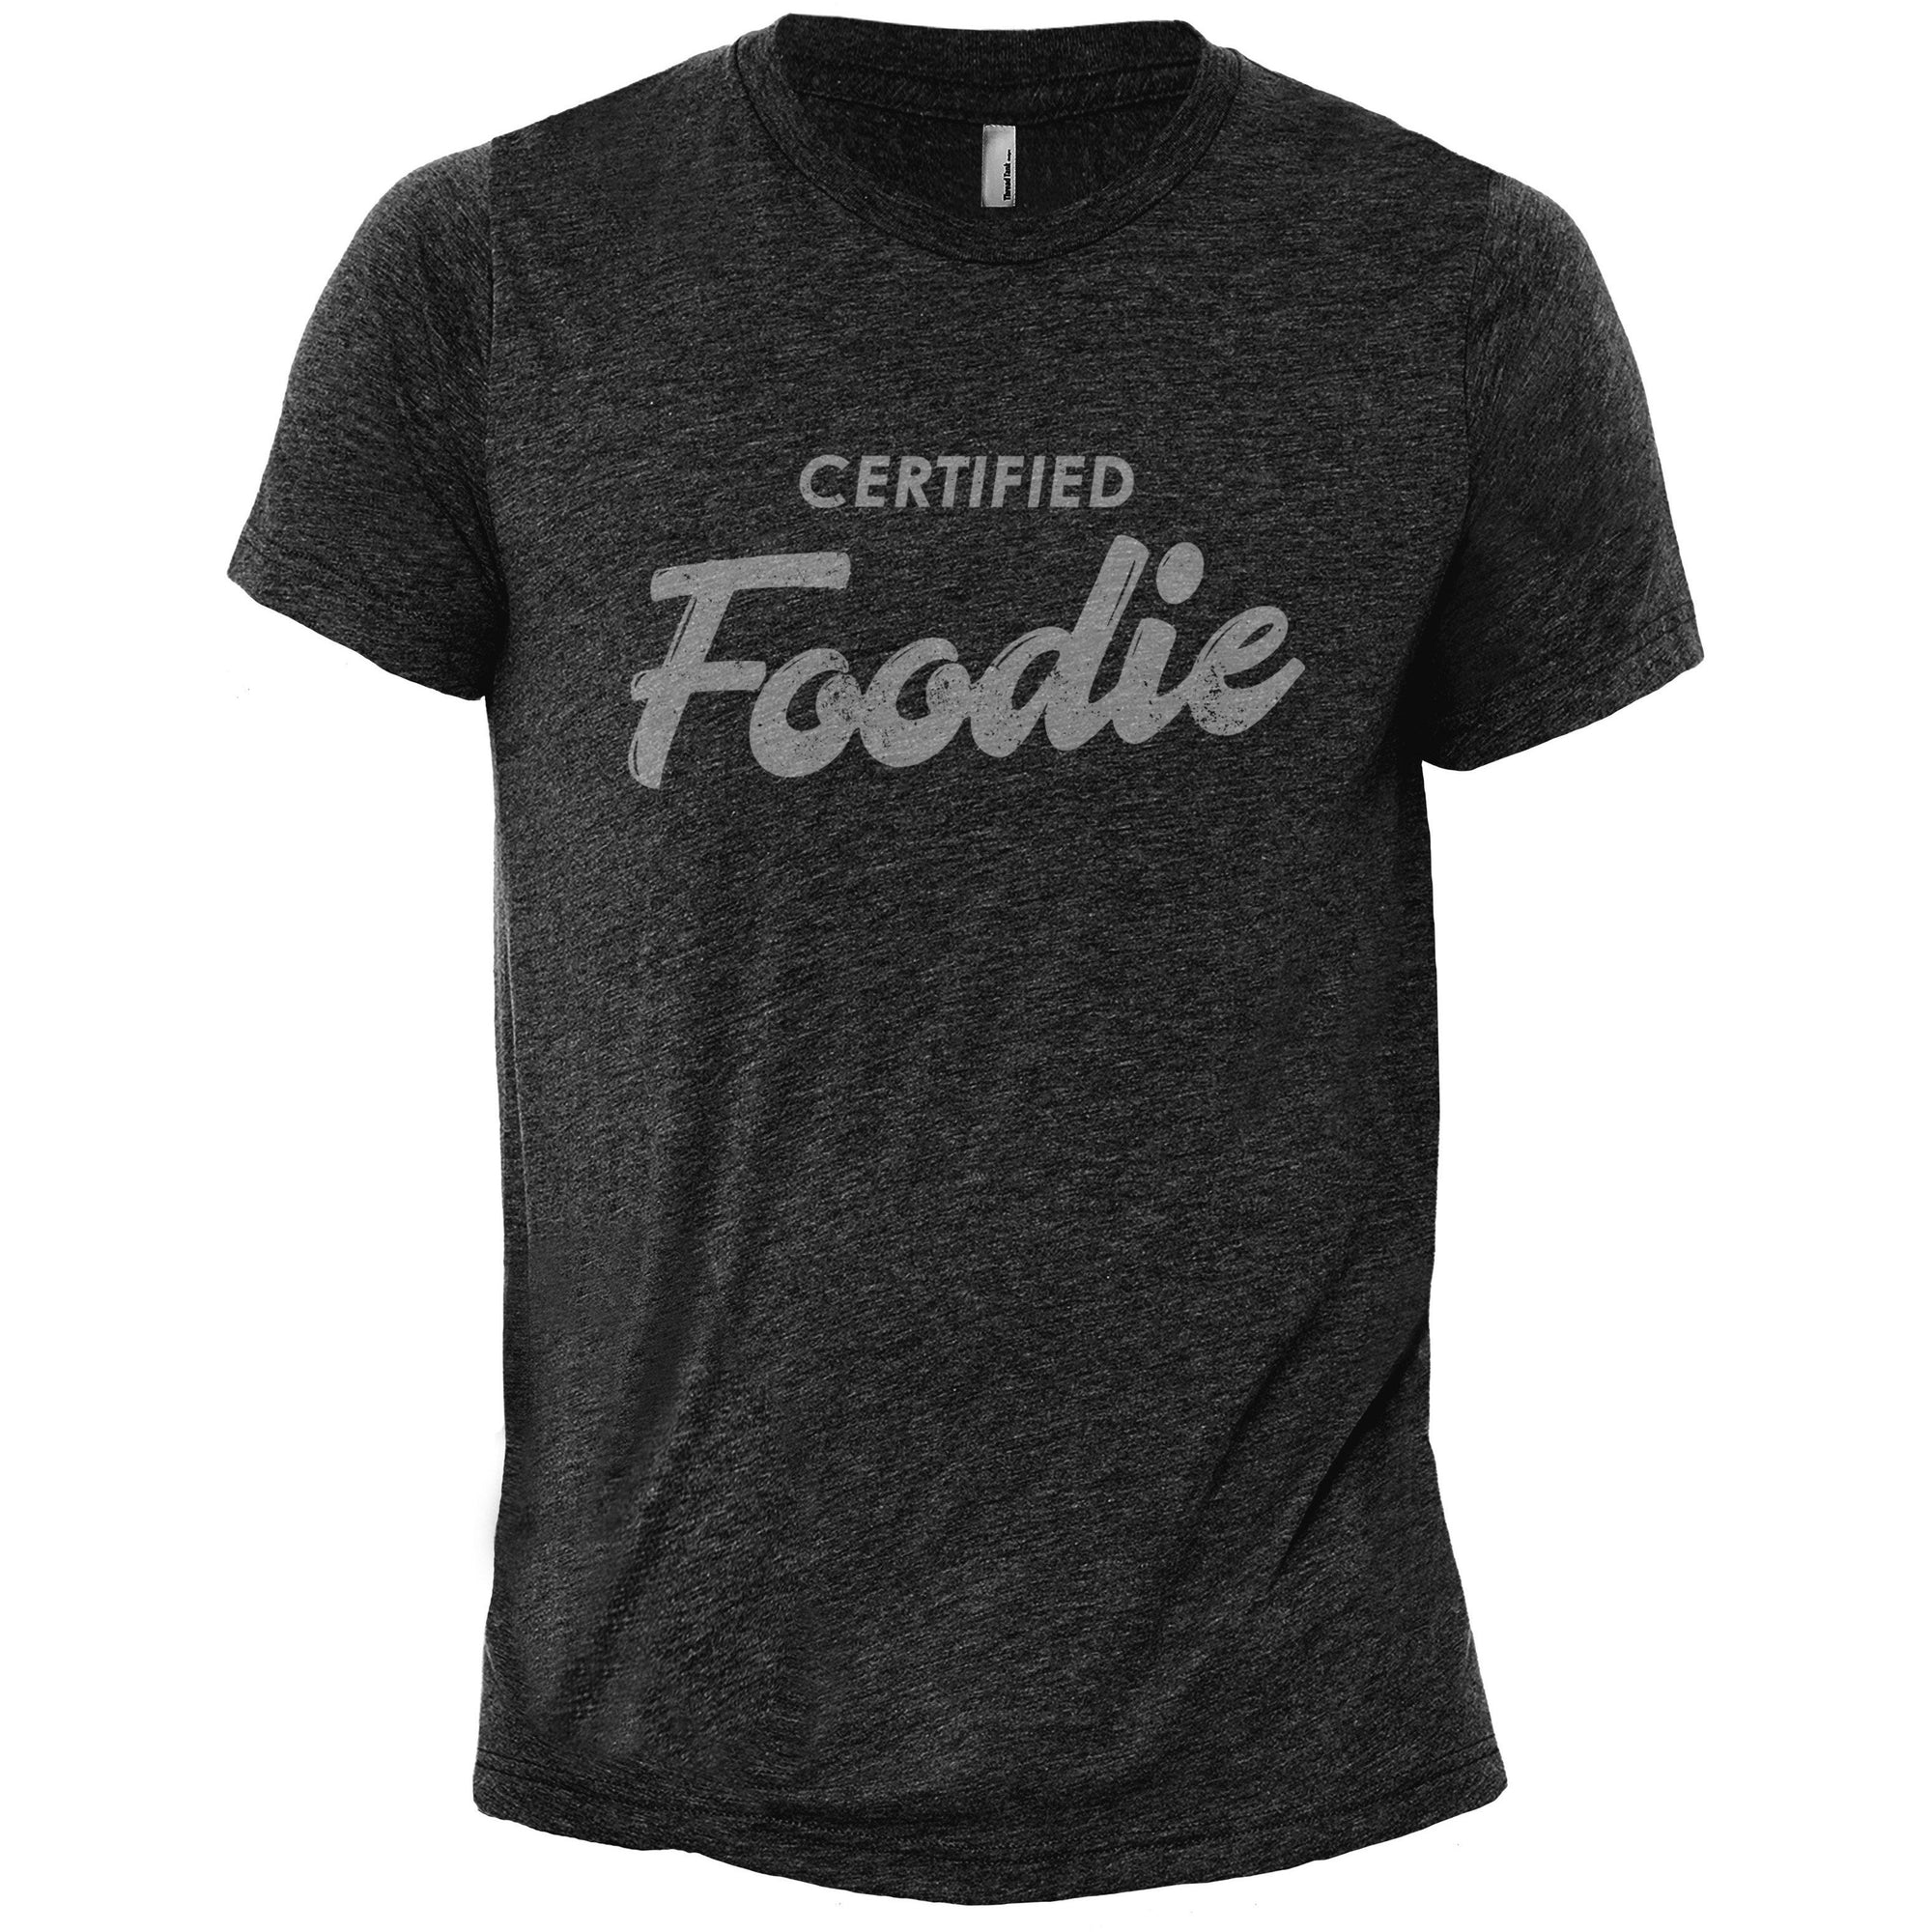 Certified Foodie Heather Grey Printed Graphic Men's Crew T-Shirt Tee